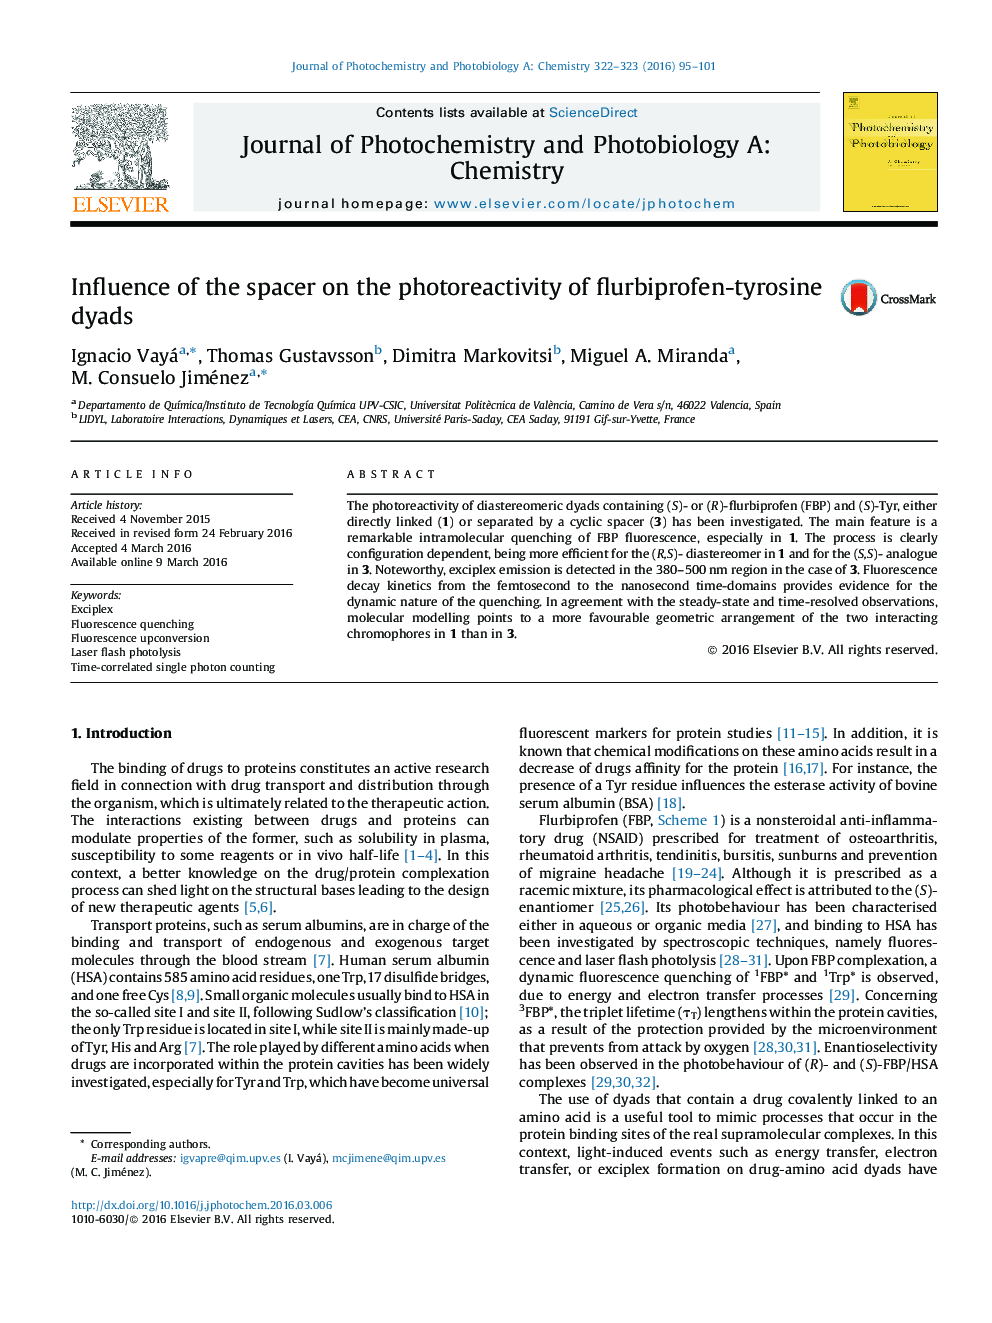 Influence of the spacer on the photoreactivity of flurbiprofen-tyrosine dyads